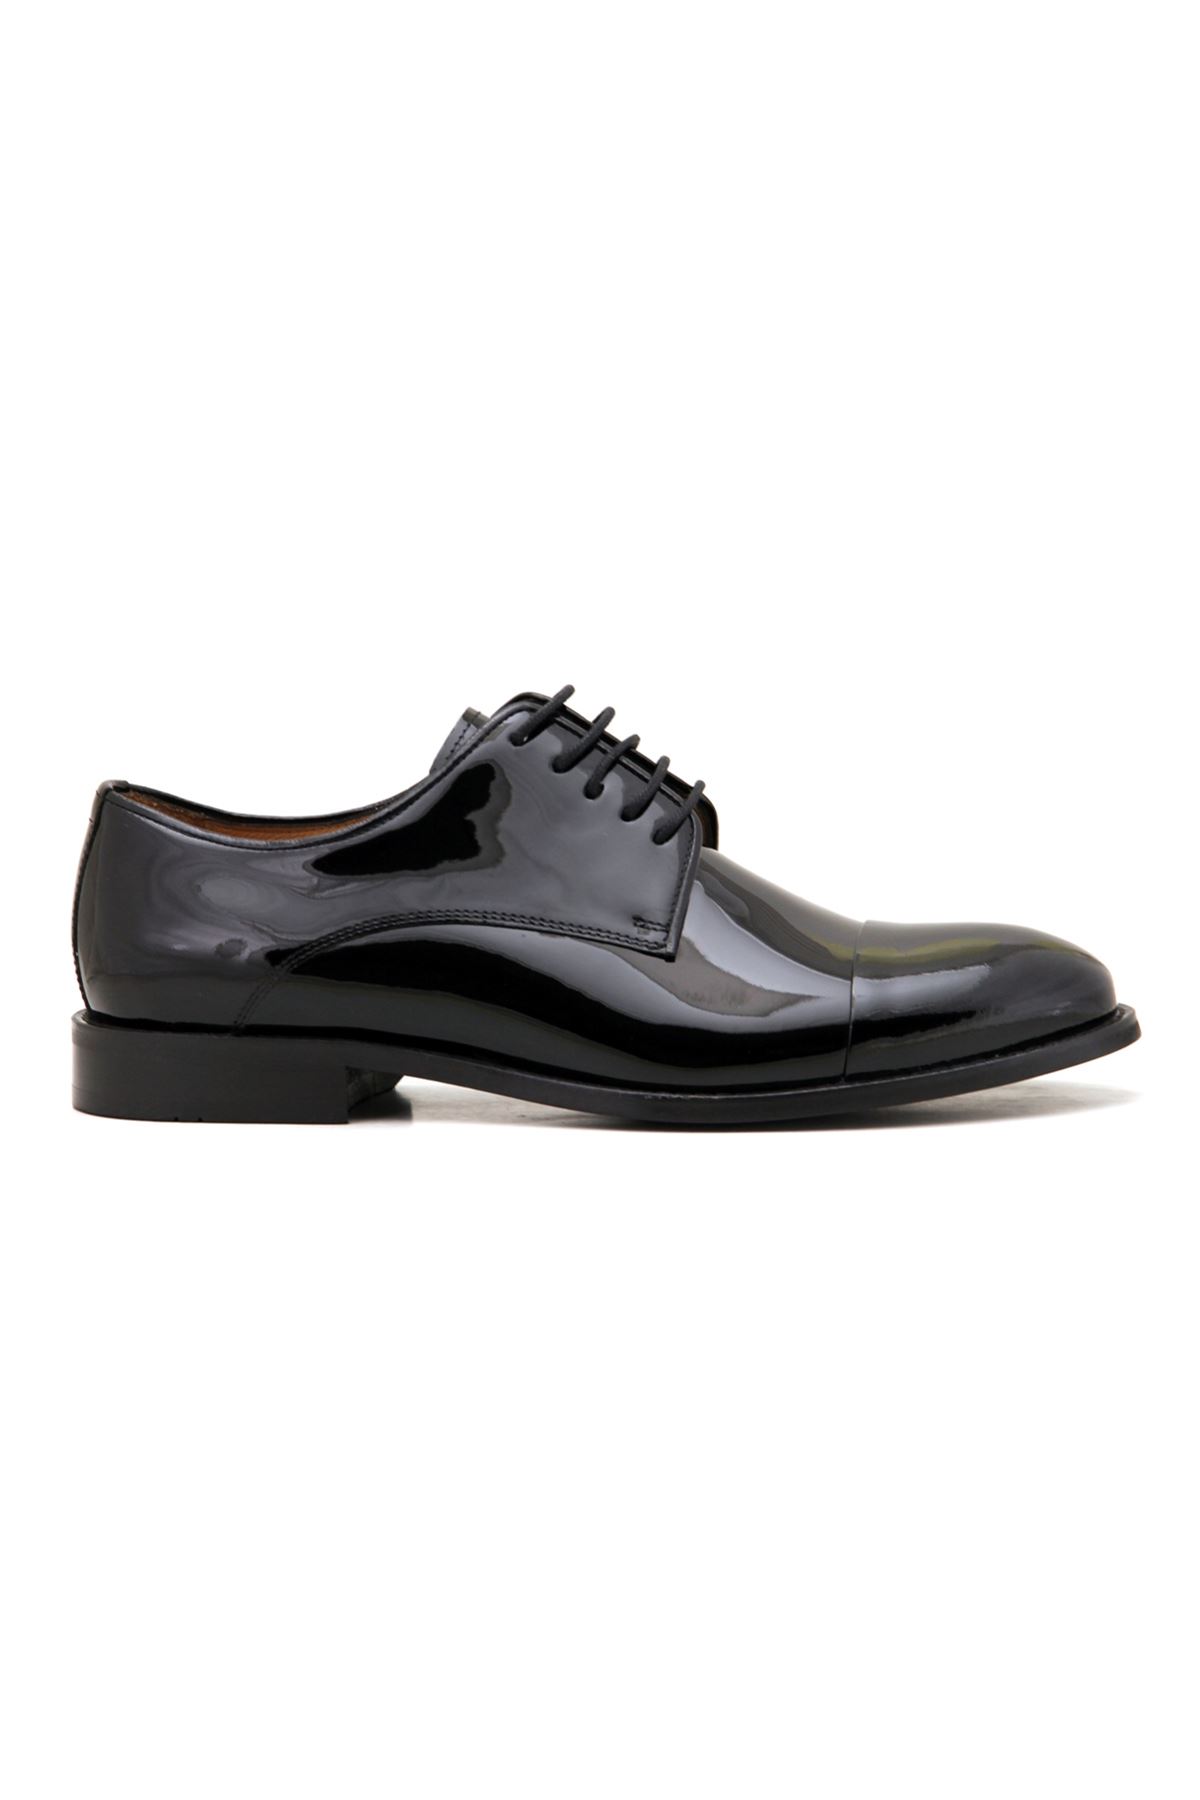 Libero 3920 Klasik Erkek Ayakkabı - Siyah Rugan